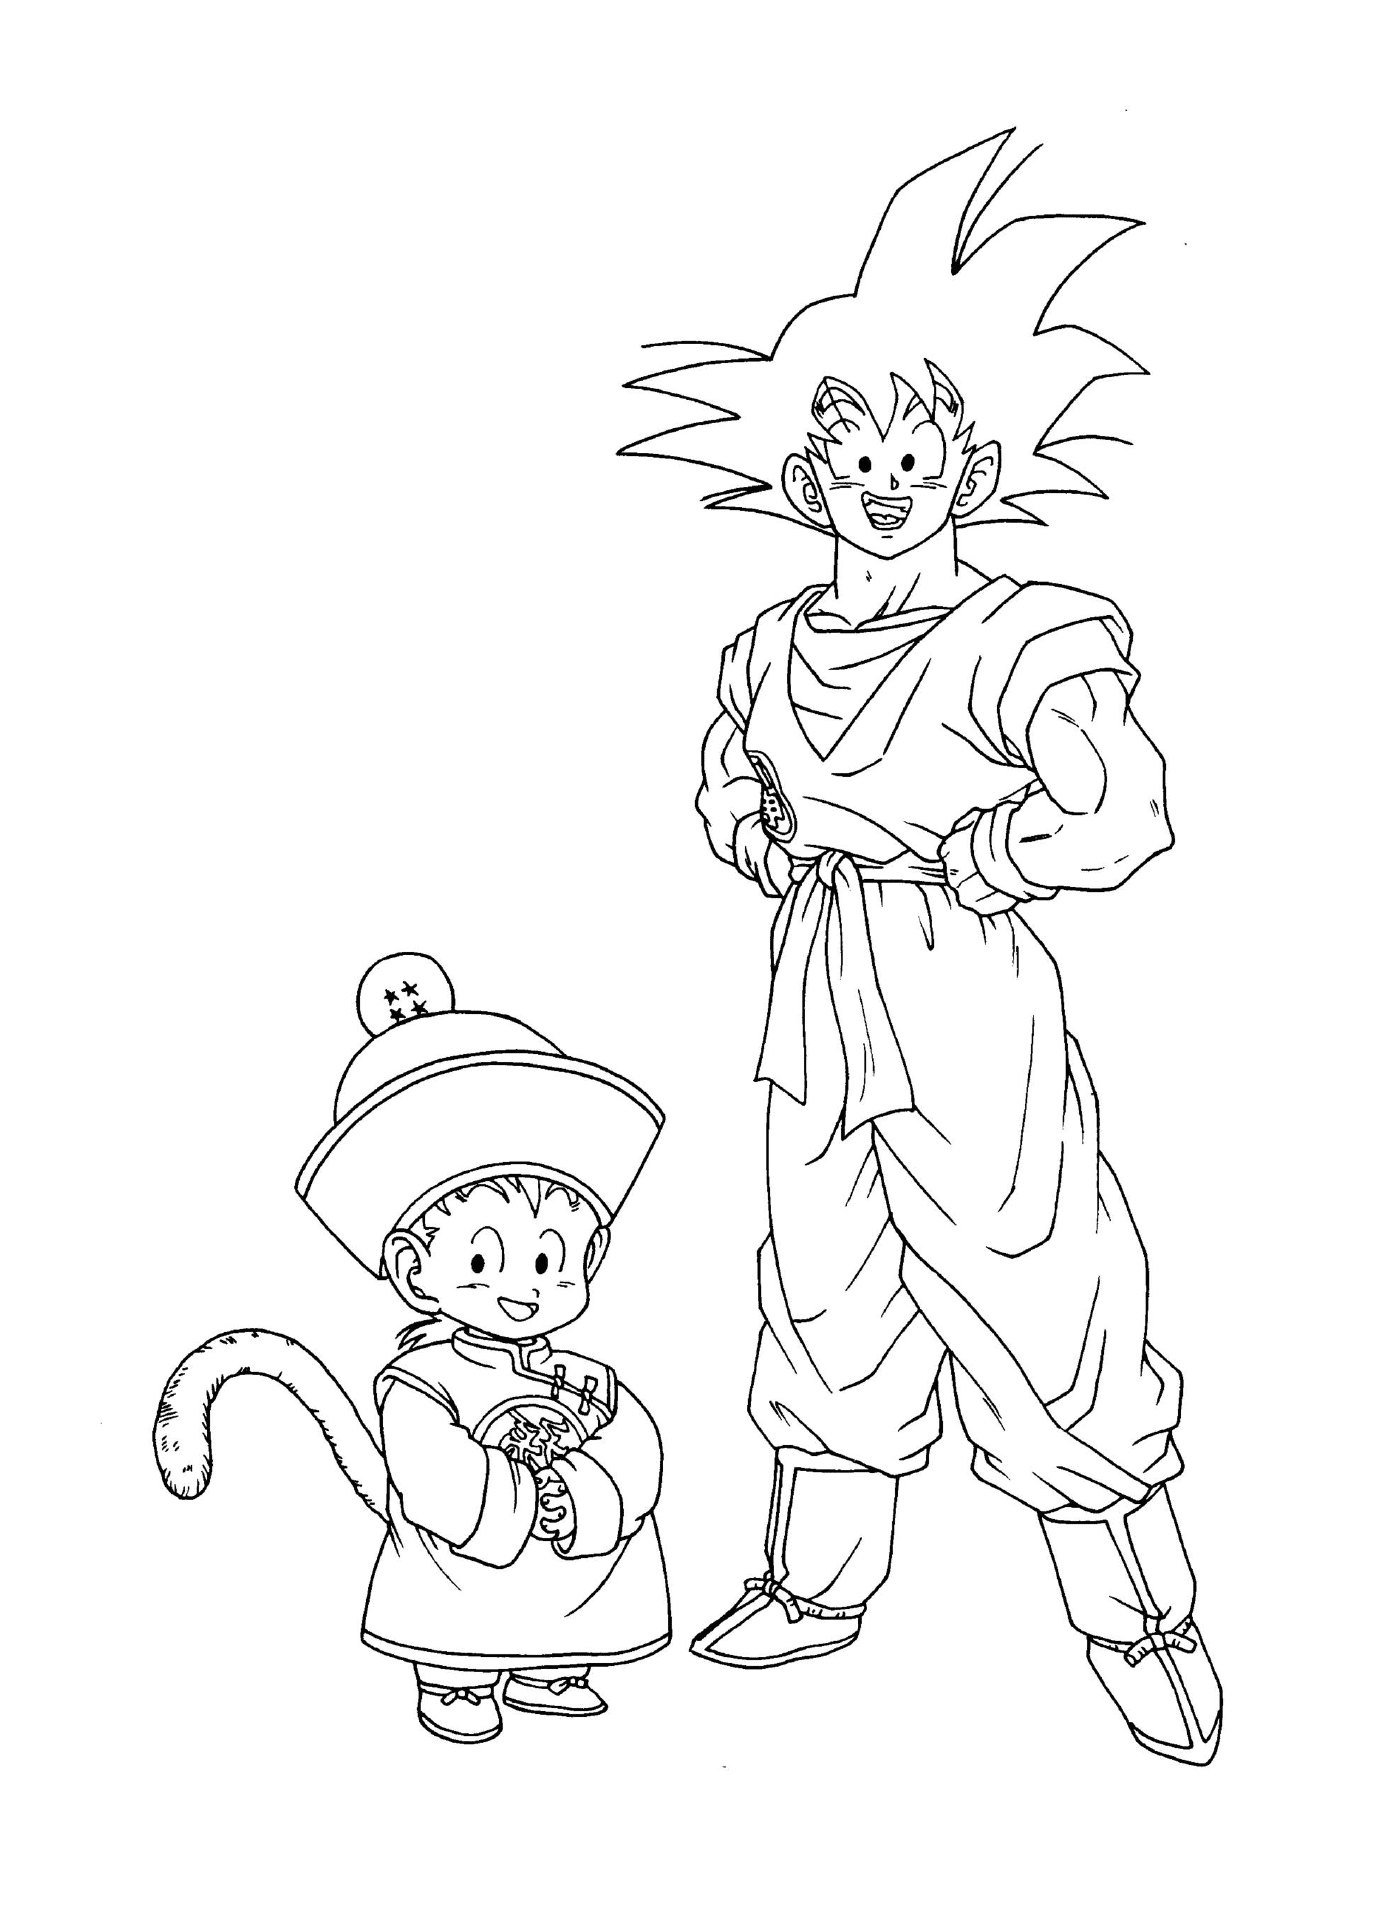  Characters of Dragon Ball Z: Goku and Goten 